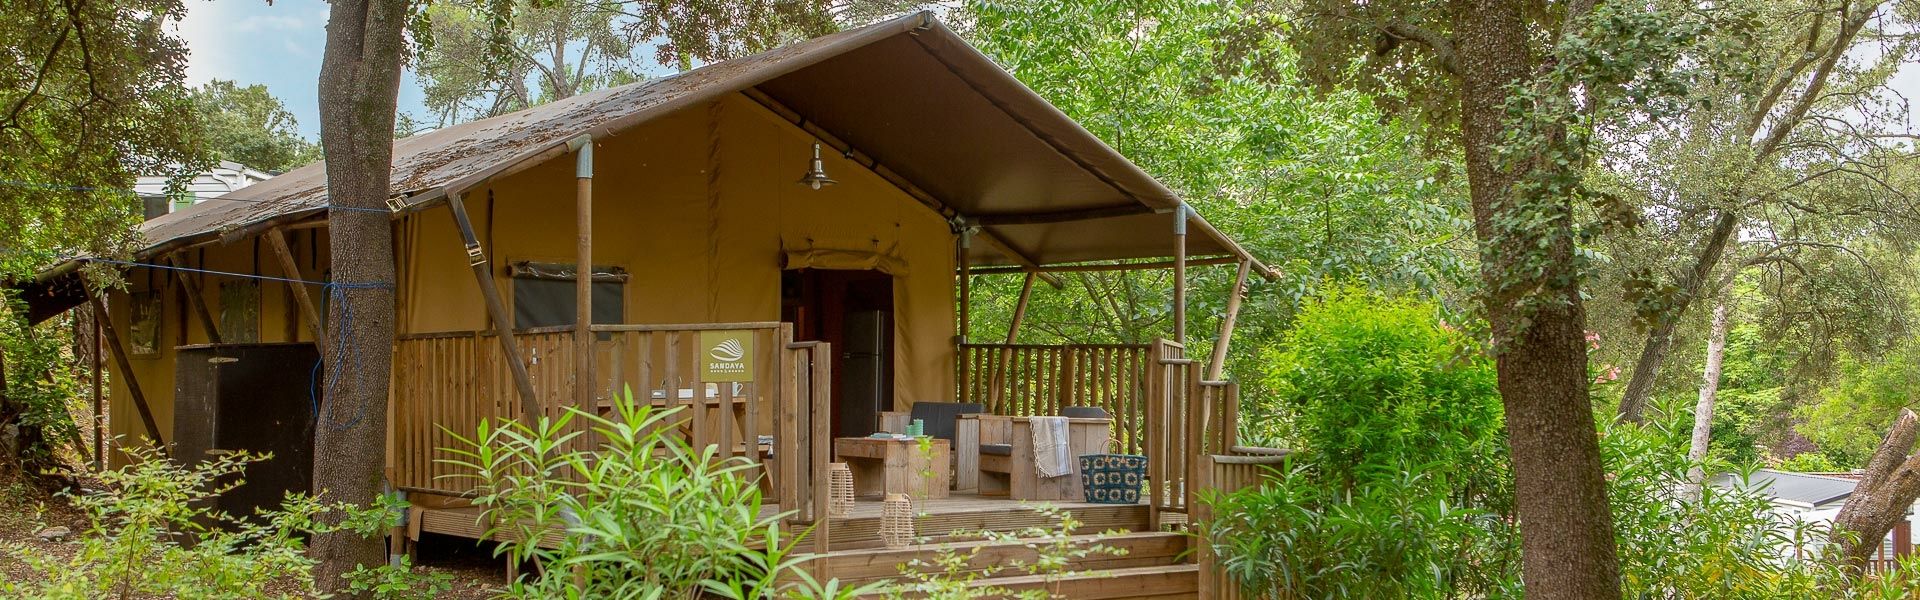 Camping Lodge-tenten